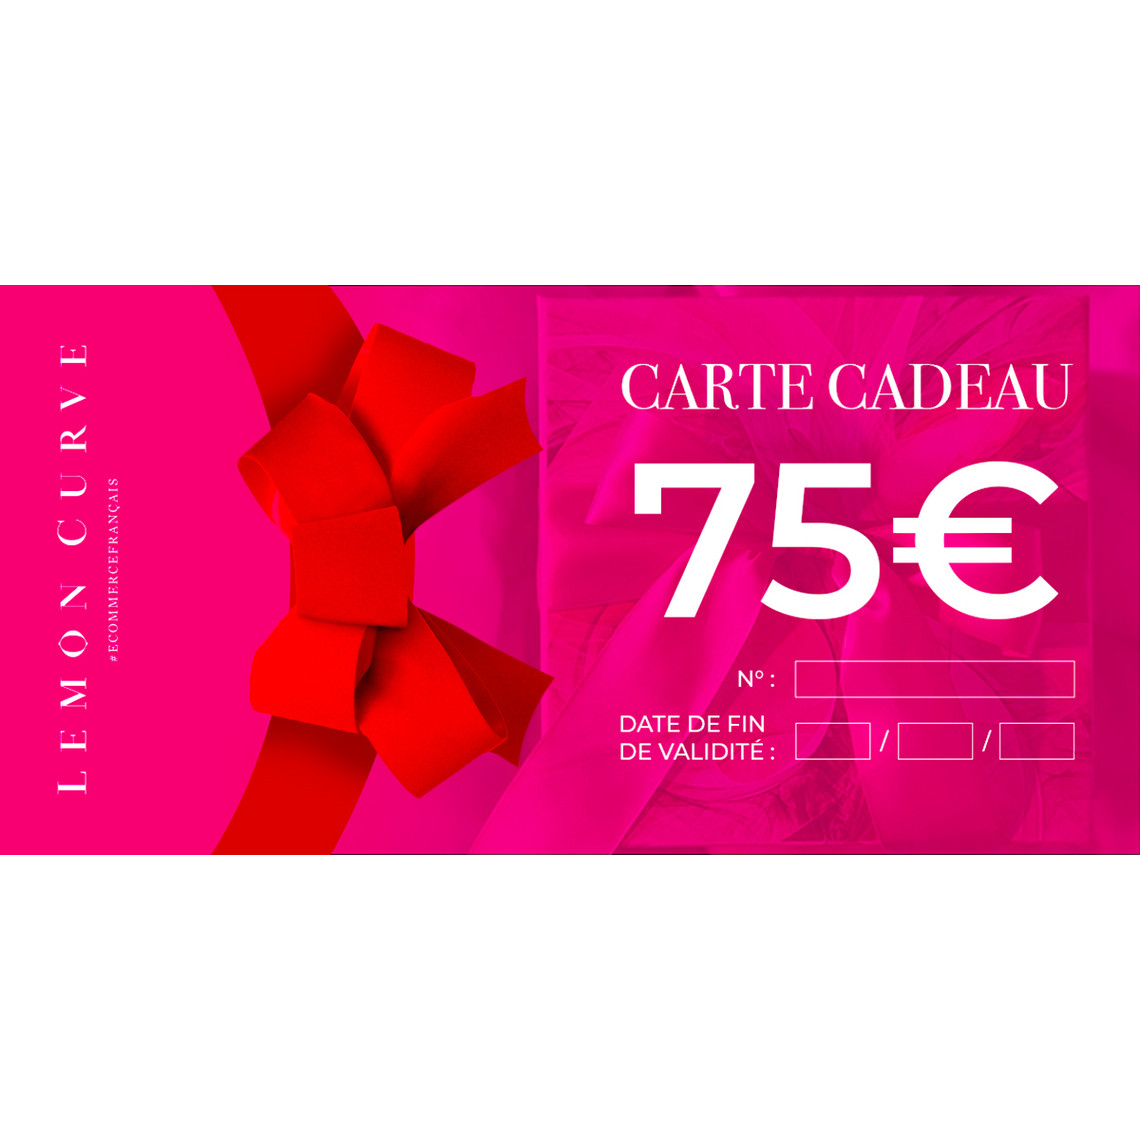 CARTE CADEAU 75 EUROS - Be Active And Positive